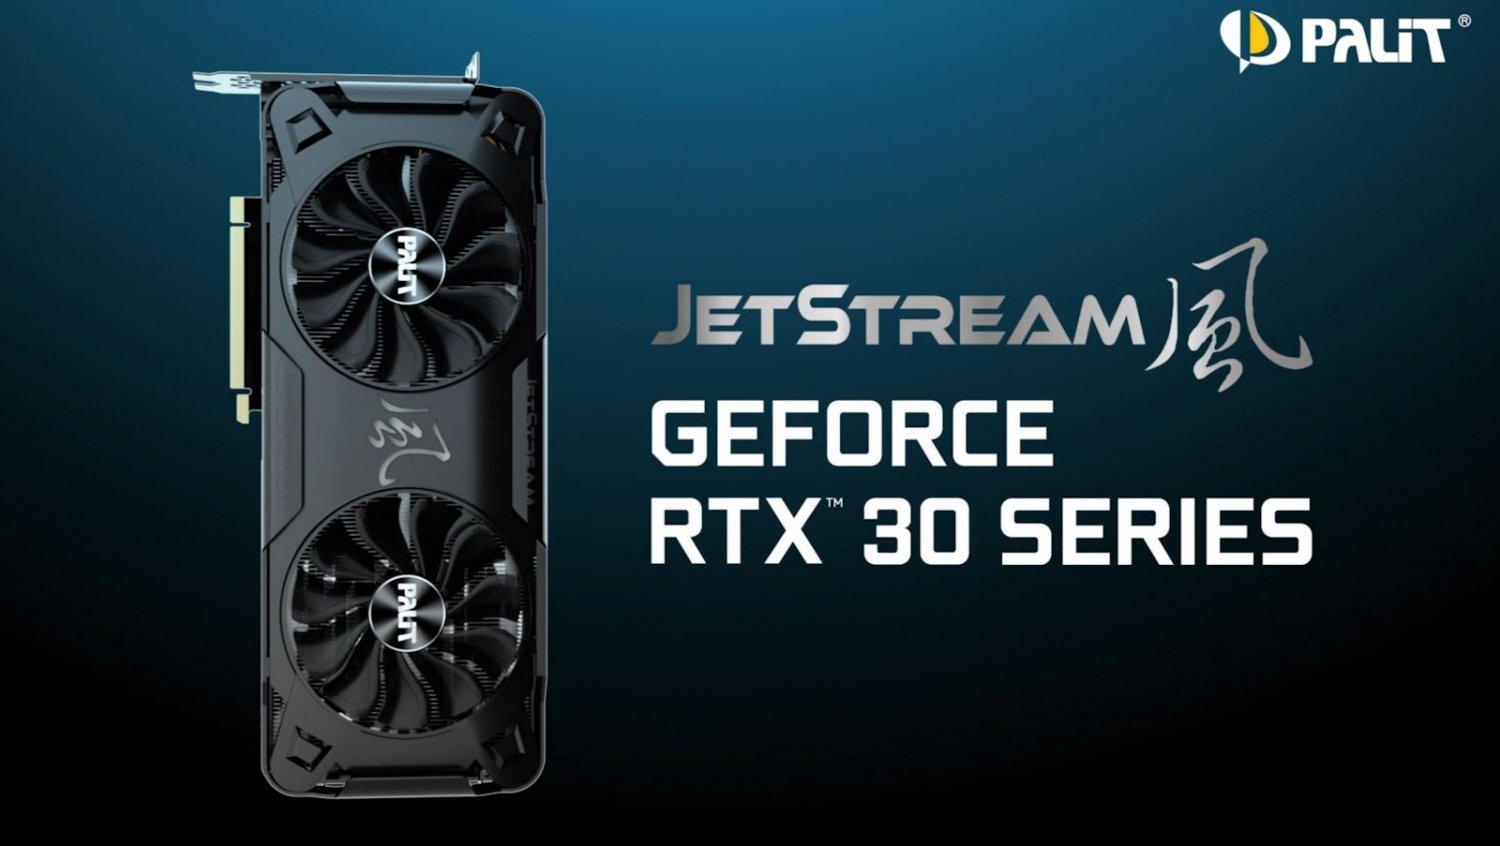 PALIT announces its new GeForce RTX 3070 JetStream graphics 